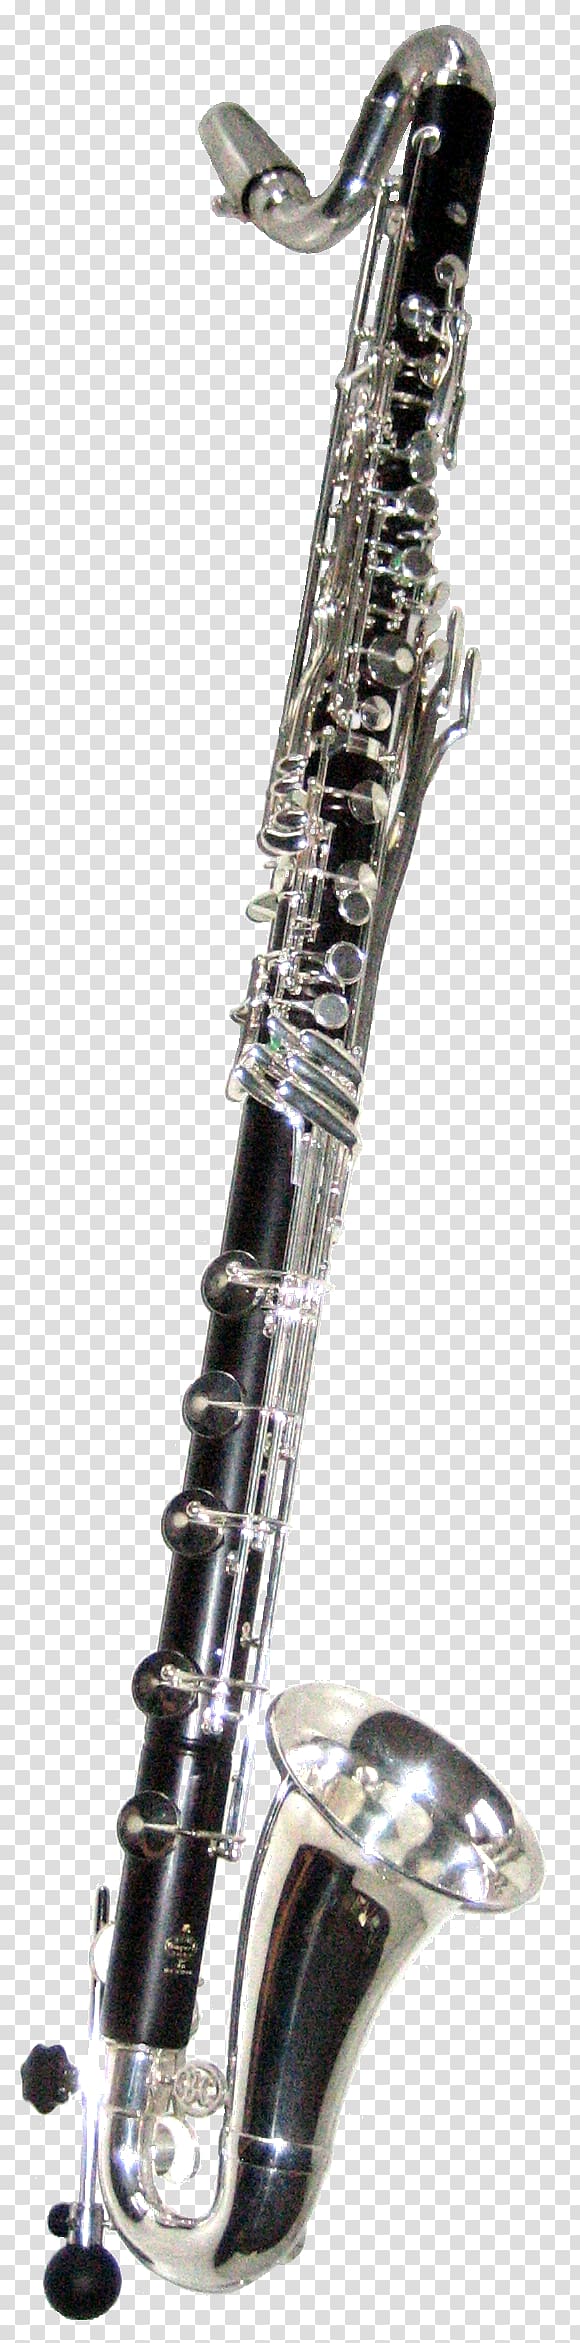 Bass clarinet Musical Instruments Woodwind instrument Jazz, Clarinette Basse Ut Buffet Crampon transparent background PNG clipart